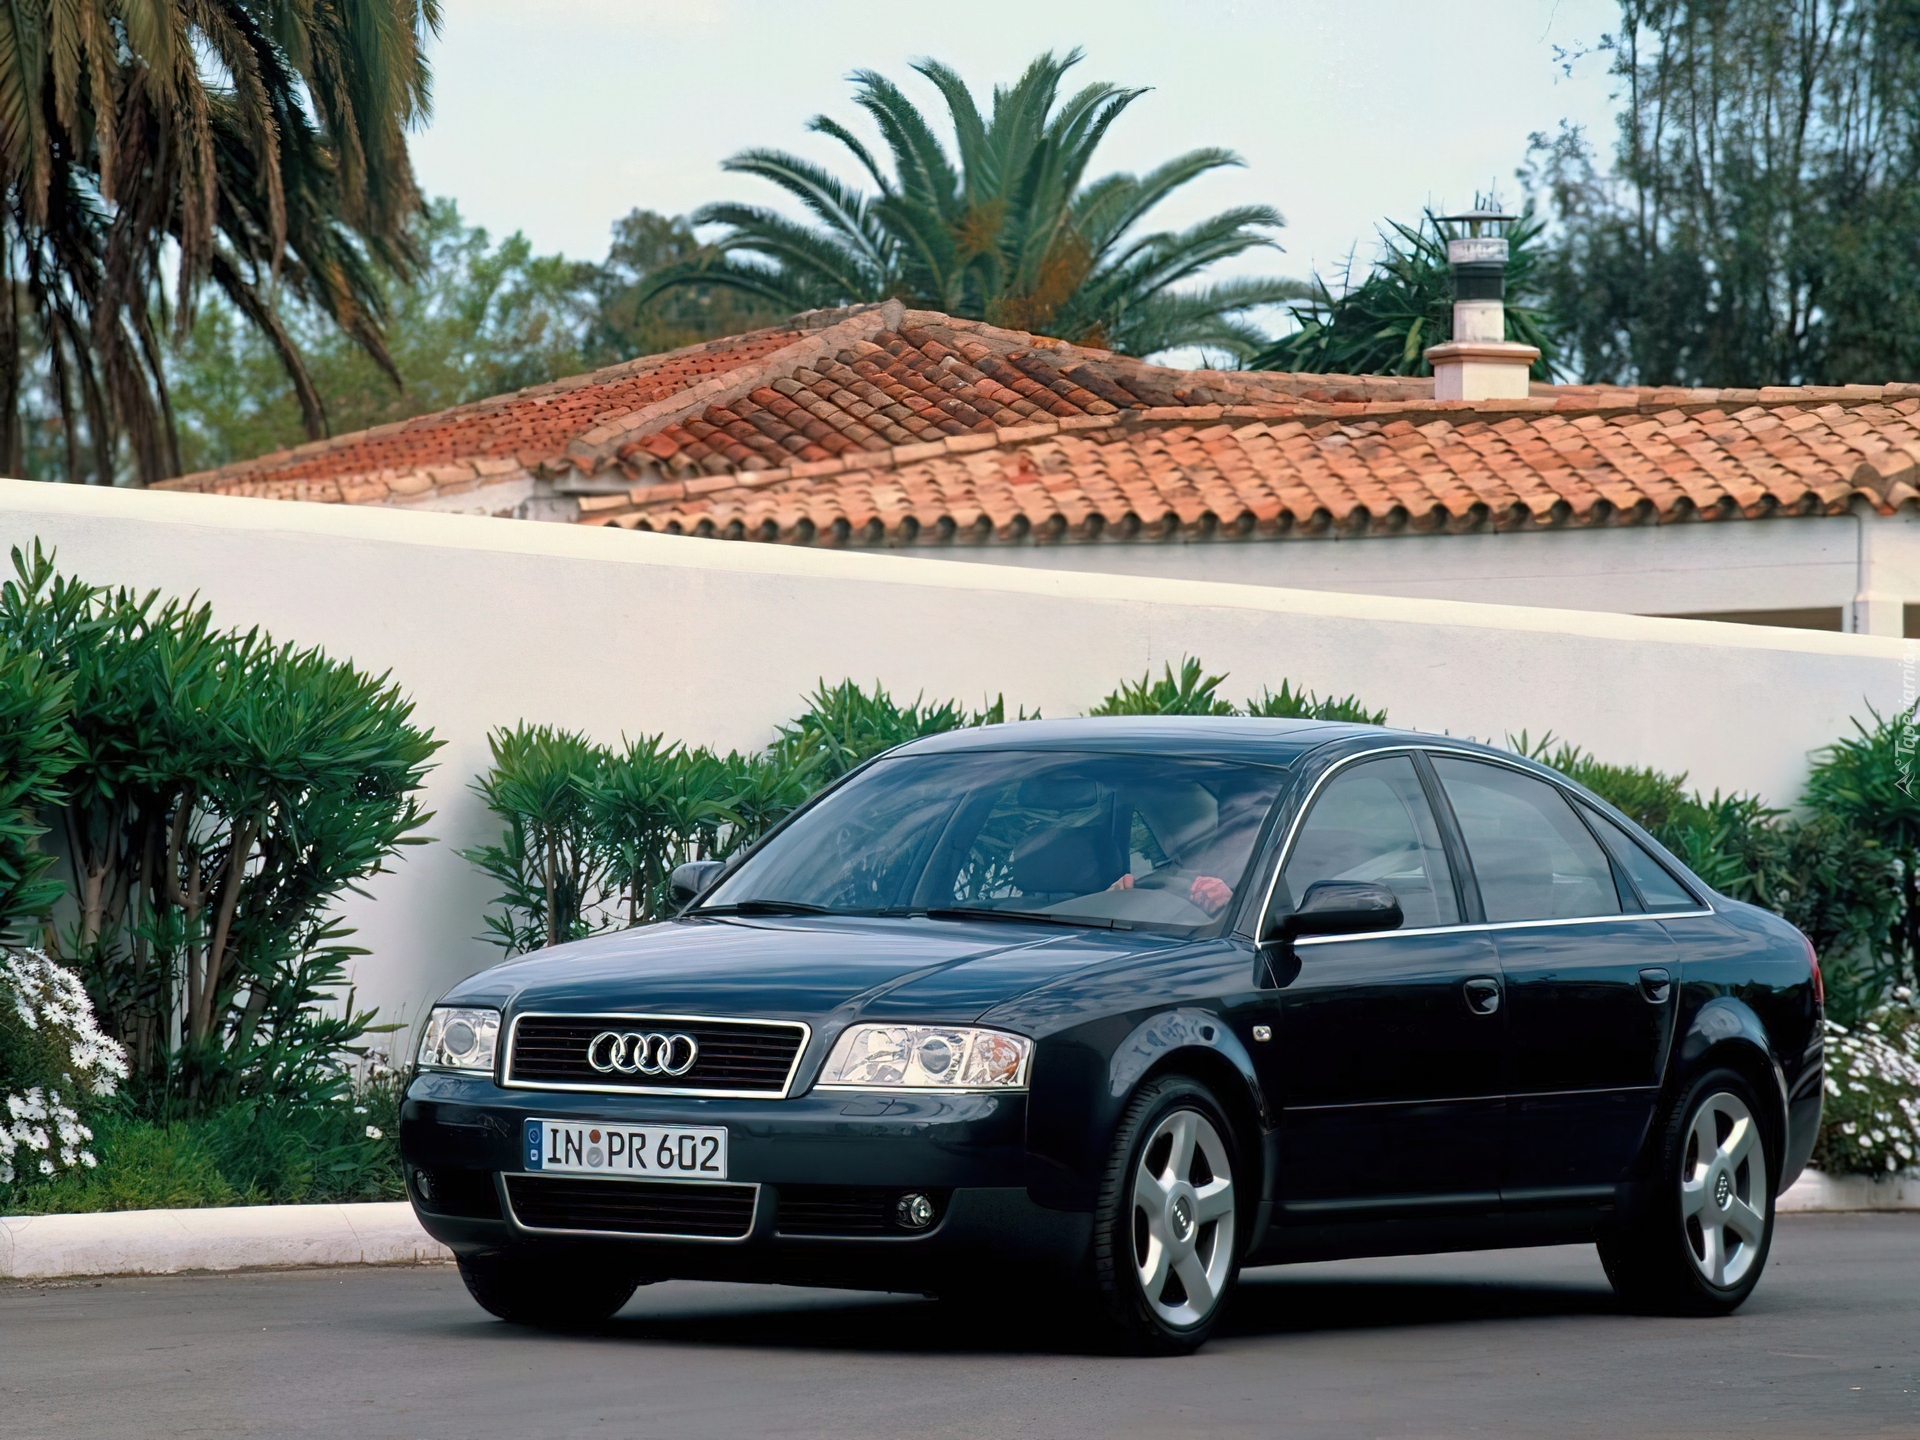 Ауди 4 2001 год. Audi a6 c5 2002. Audi a6 c5 97. Audi a6 c5 седан. Audi a6 2001.